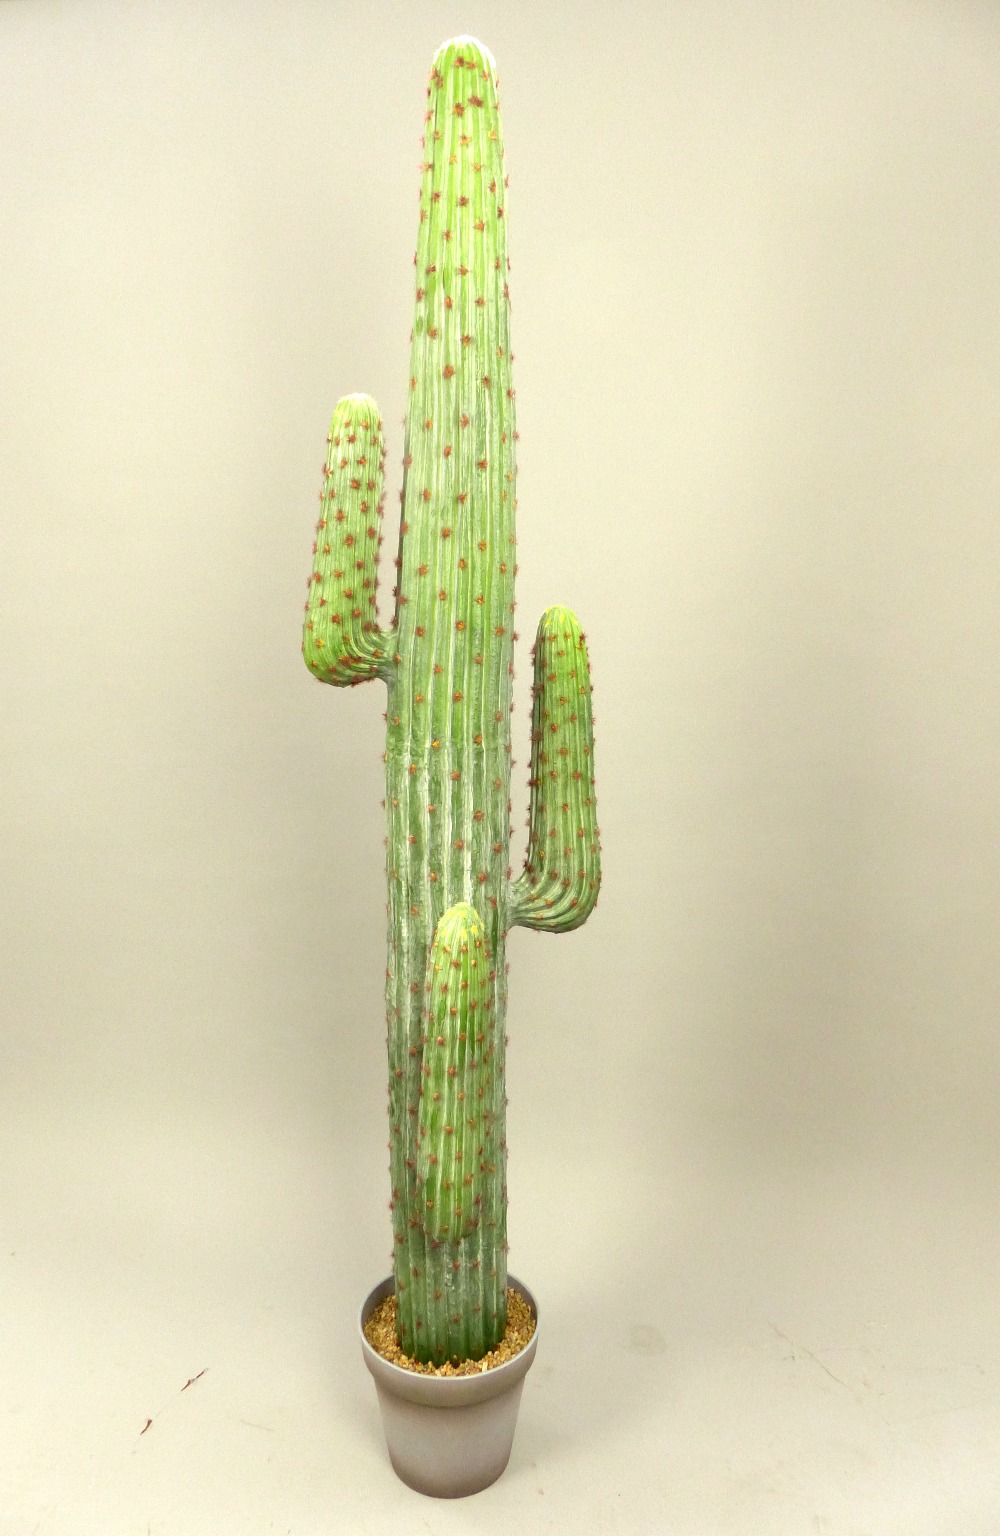 Ornamental desert cactus, 170cm h